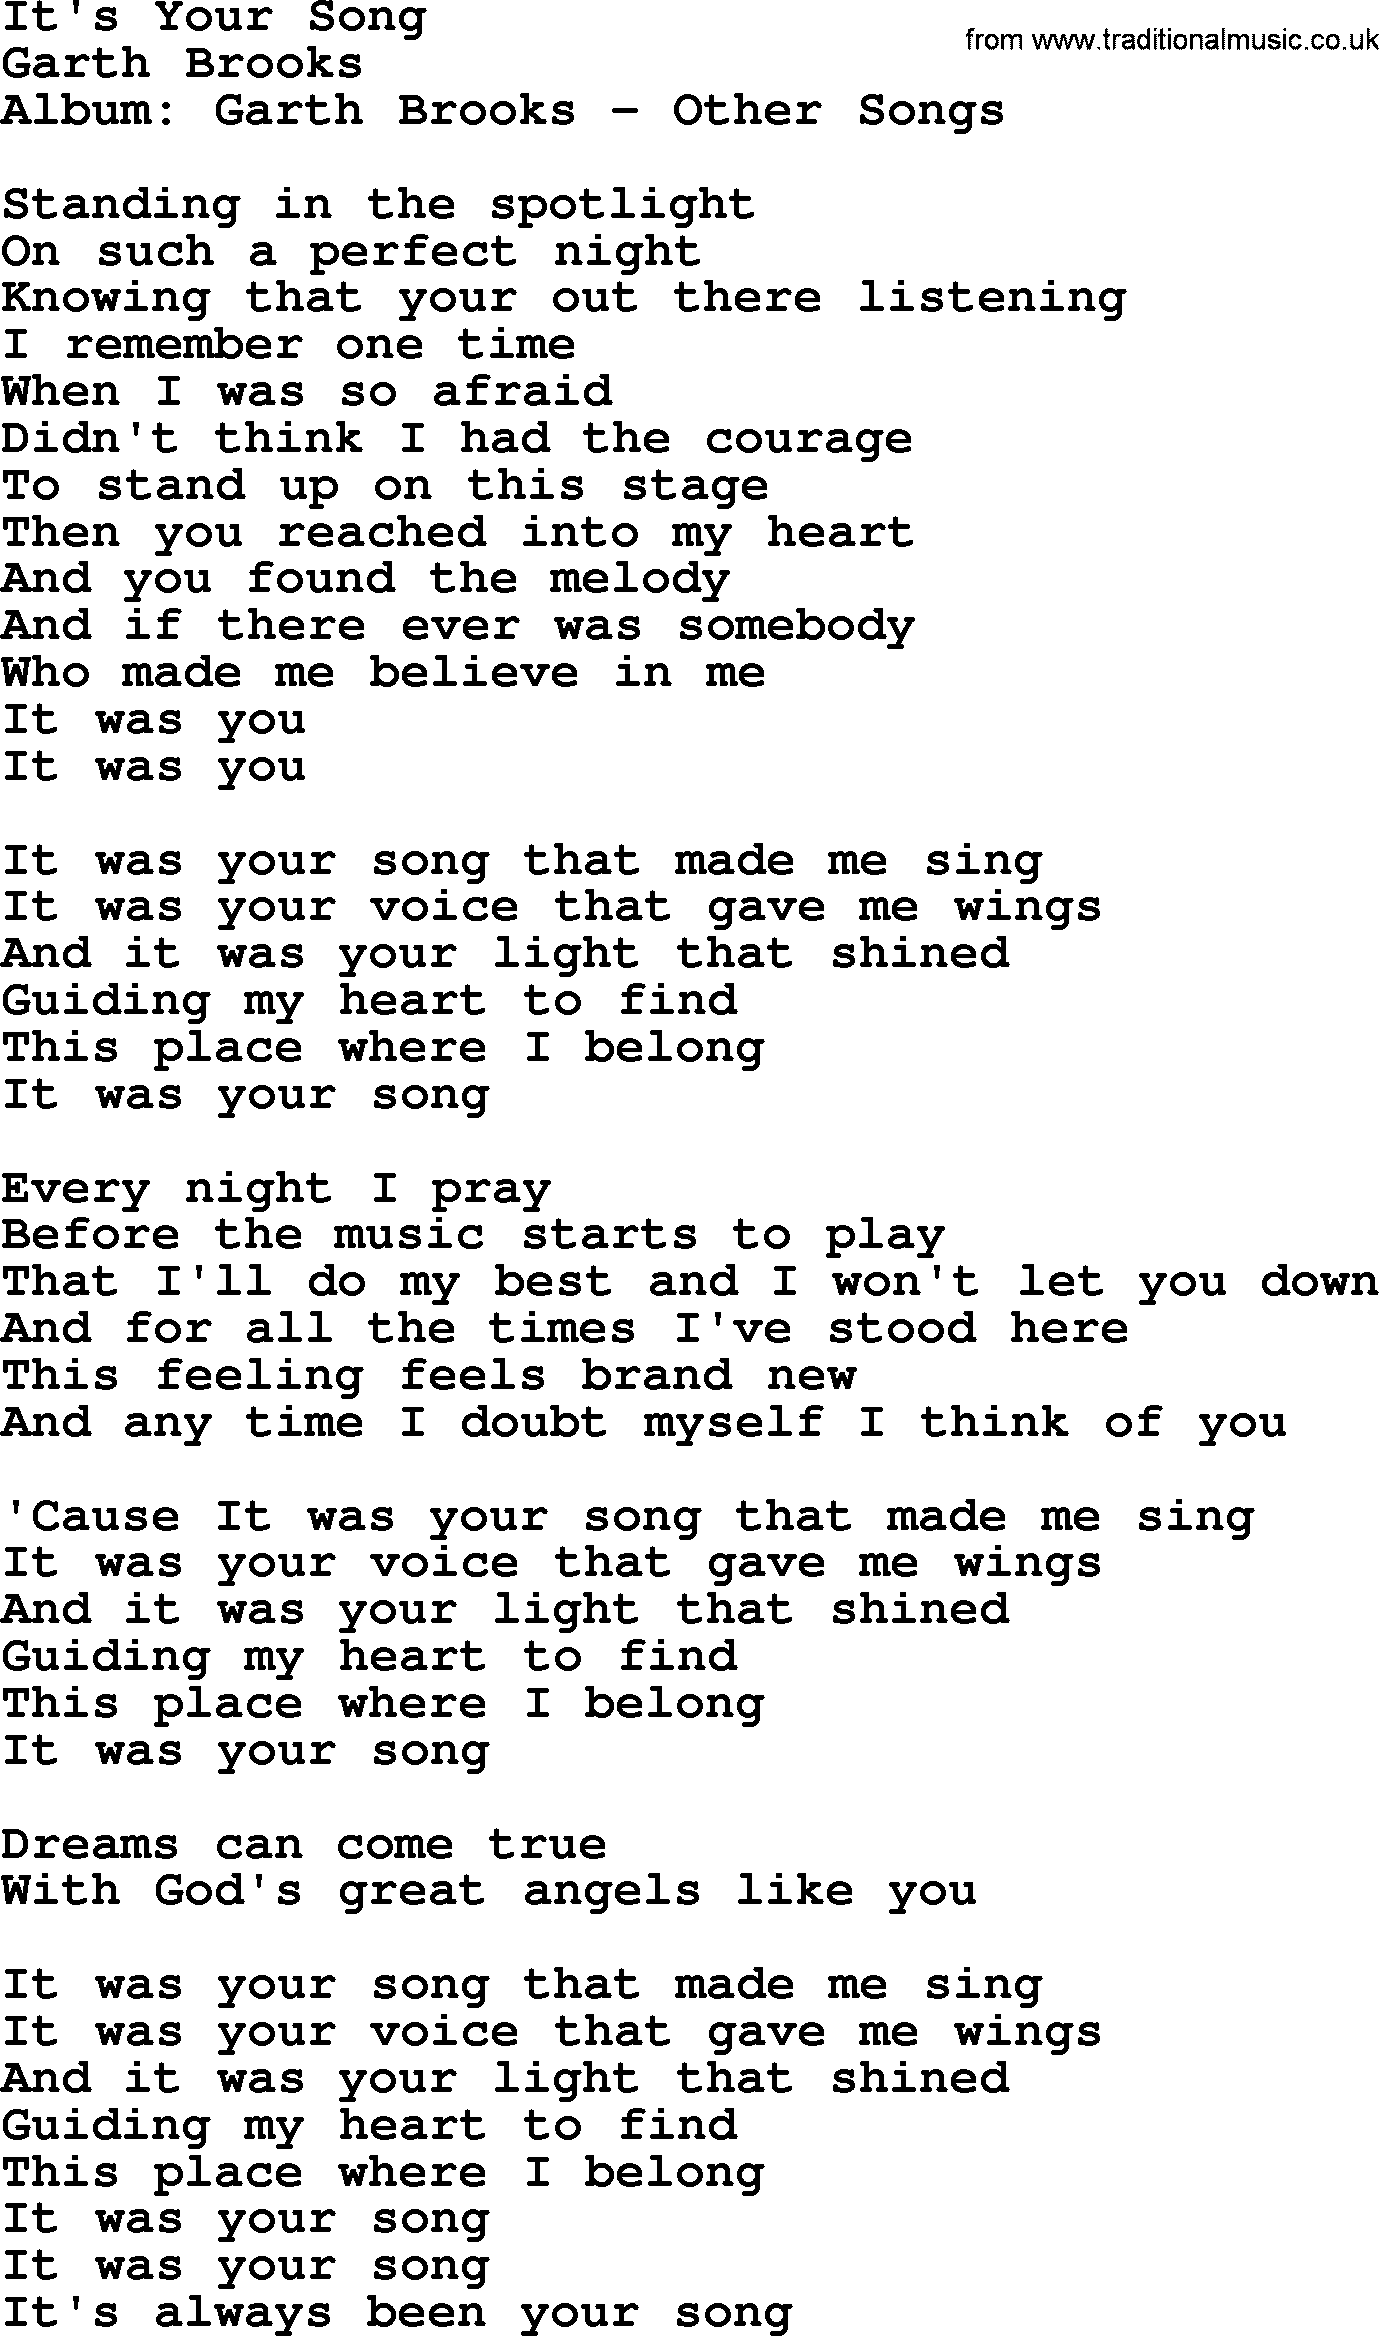 Garth Brooks song: It's Your Song, lyrics